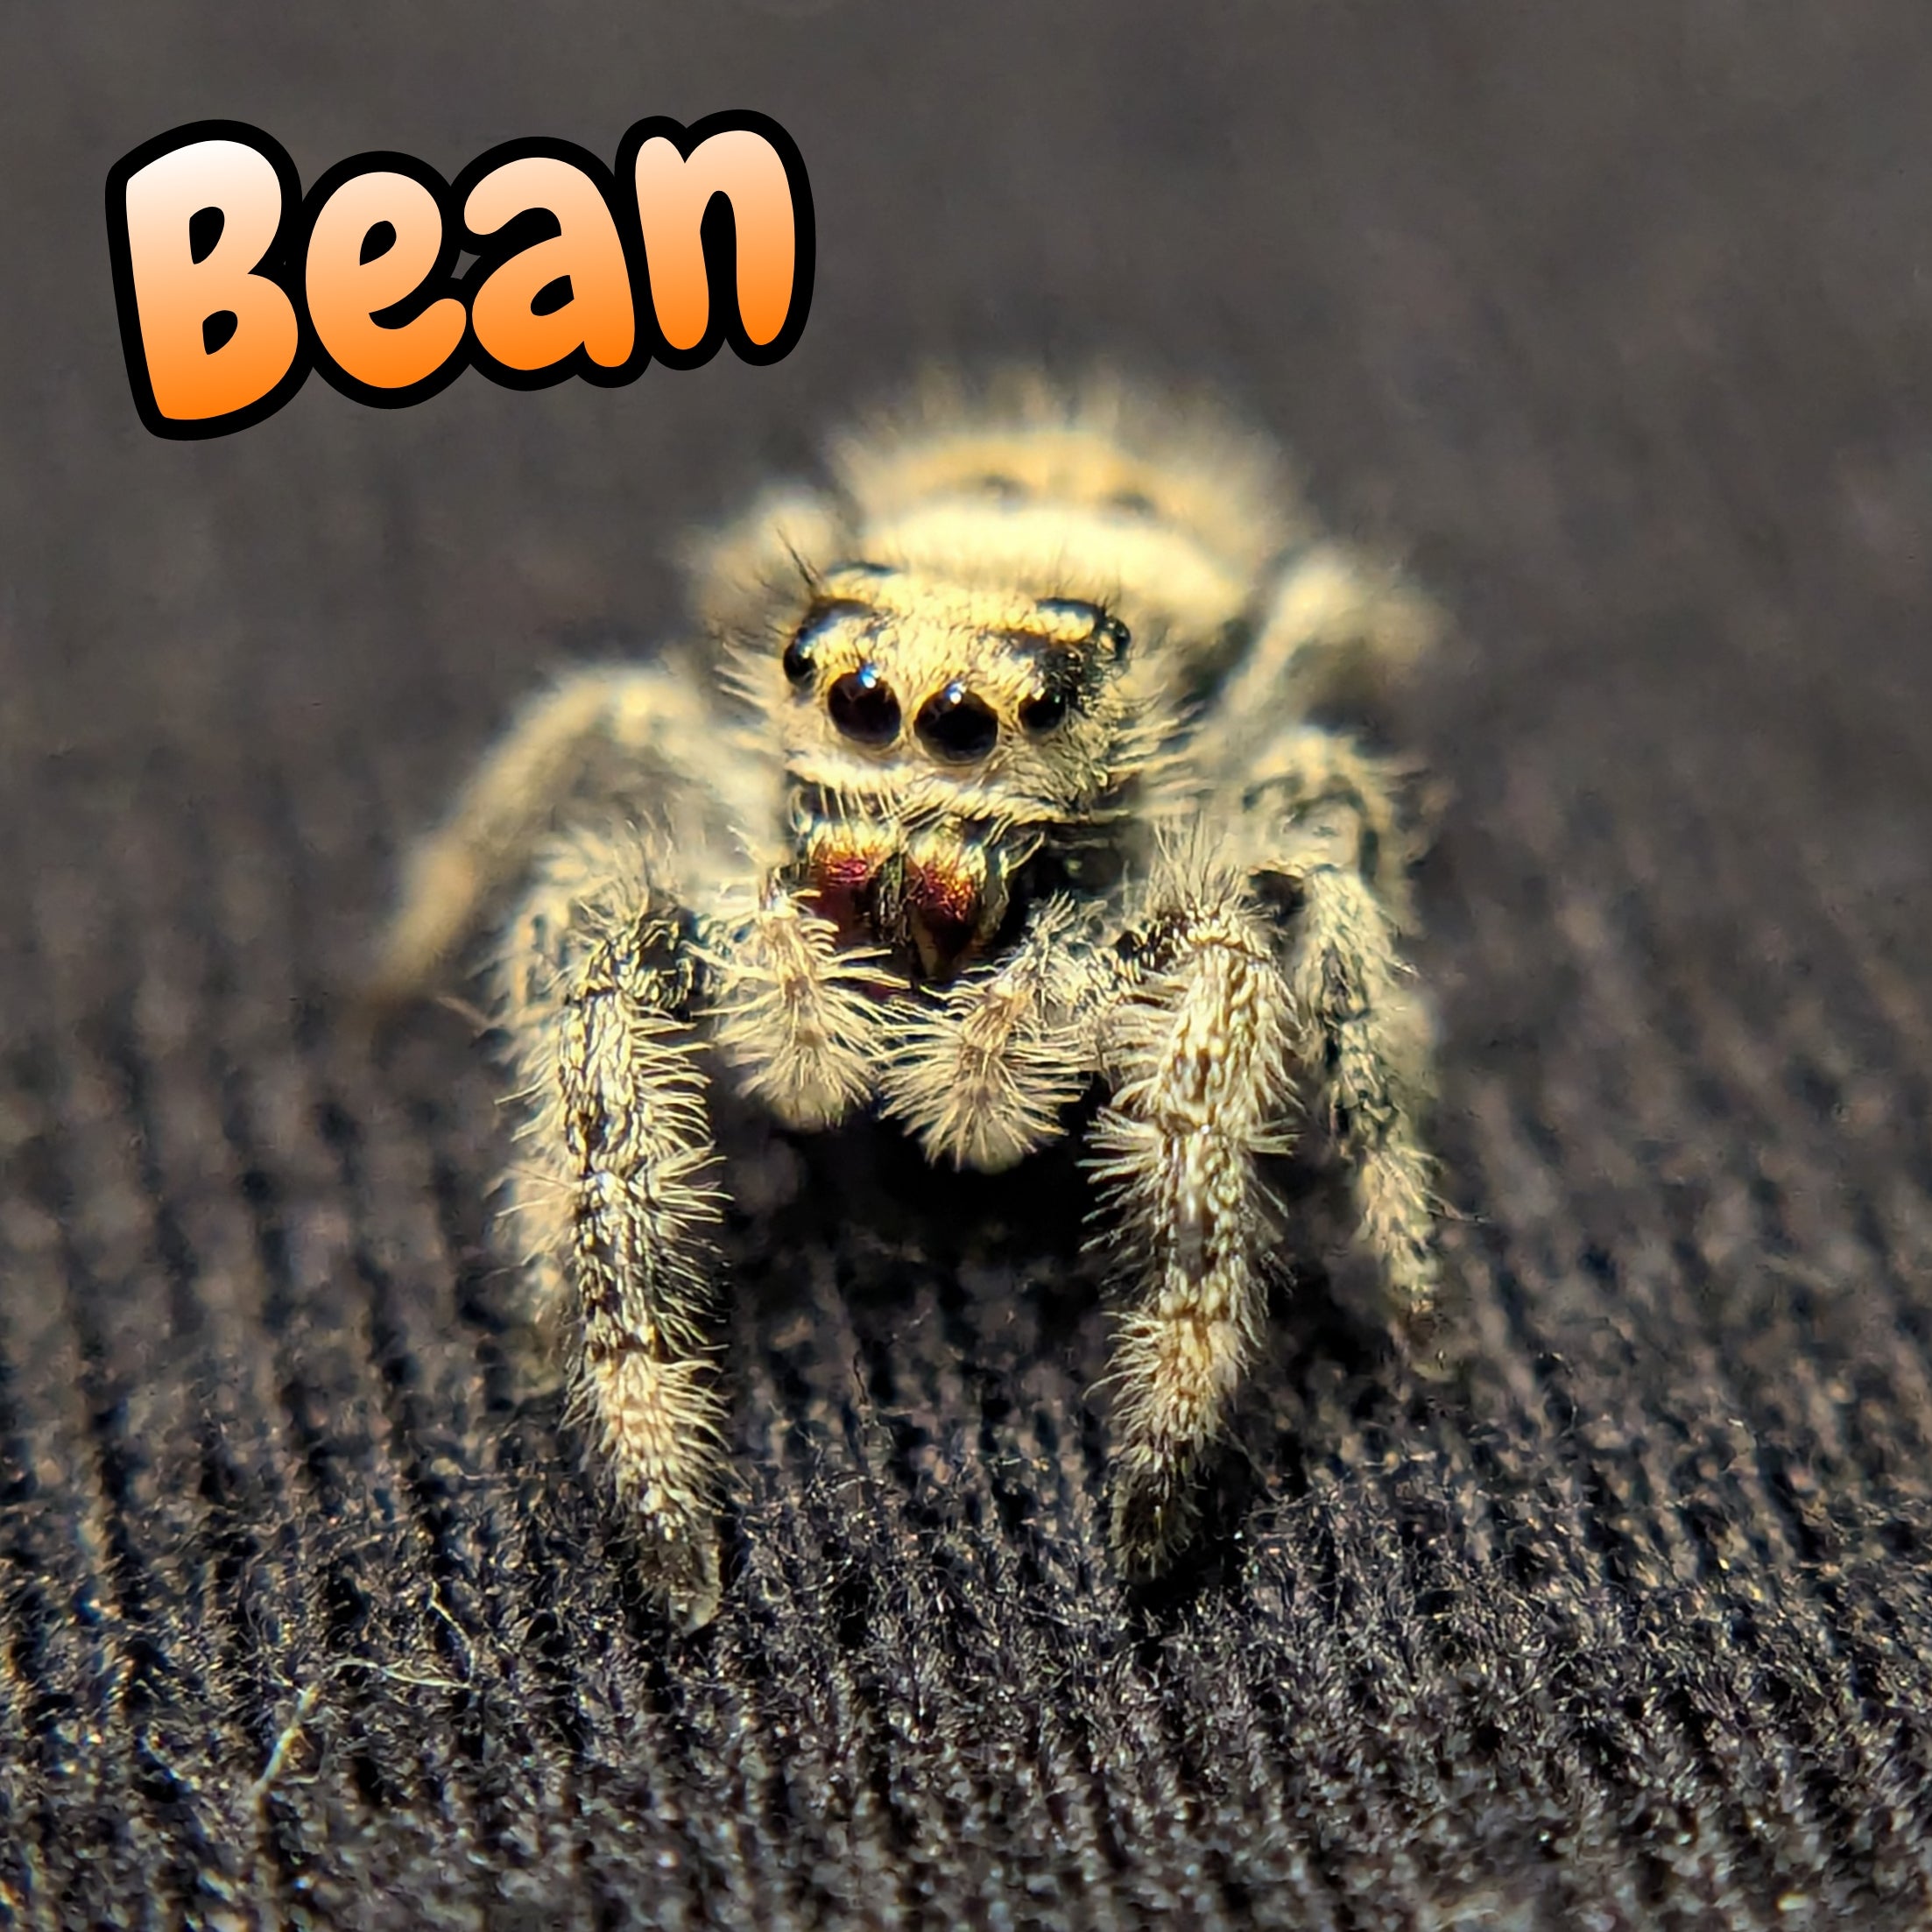 Apalachicola Regal Jumping Spider "Bean"